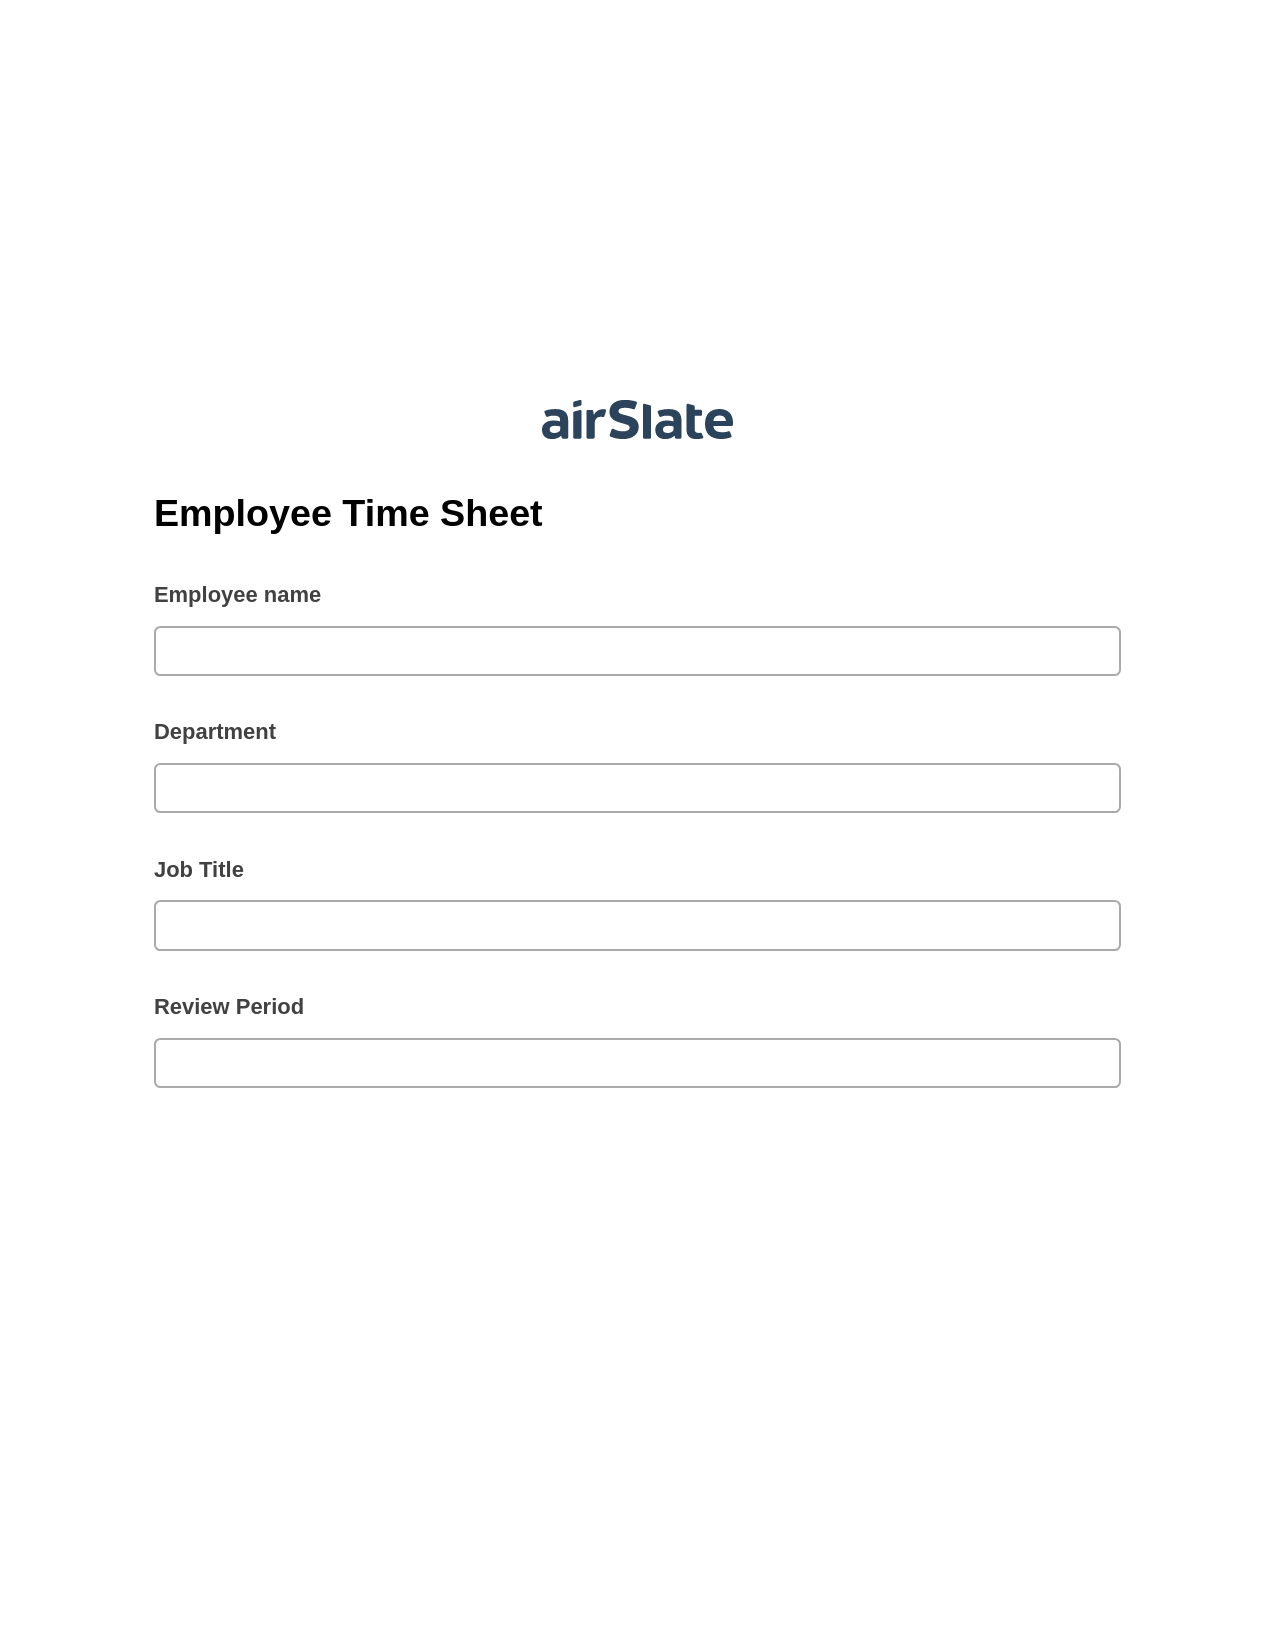 Multirole Employee Time Sheet Pre-fill from another Slate Bot, Invoke Salesforce Process Bot, Export to WebMerge Bot